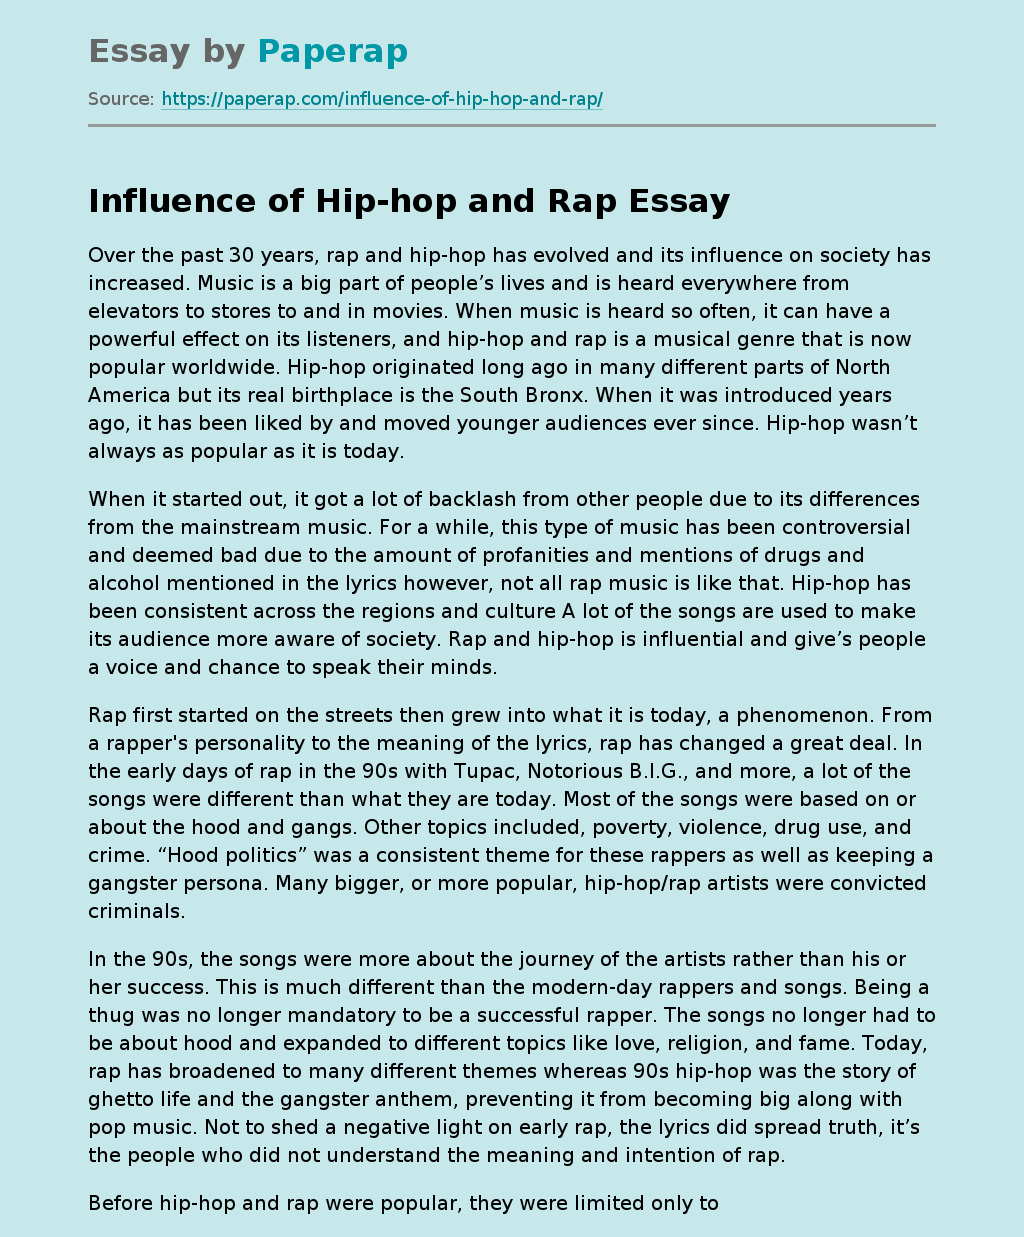 hip hop introduction essay